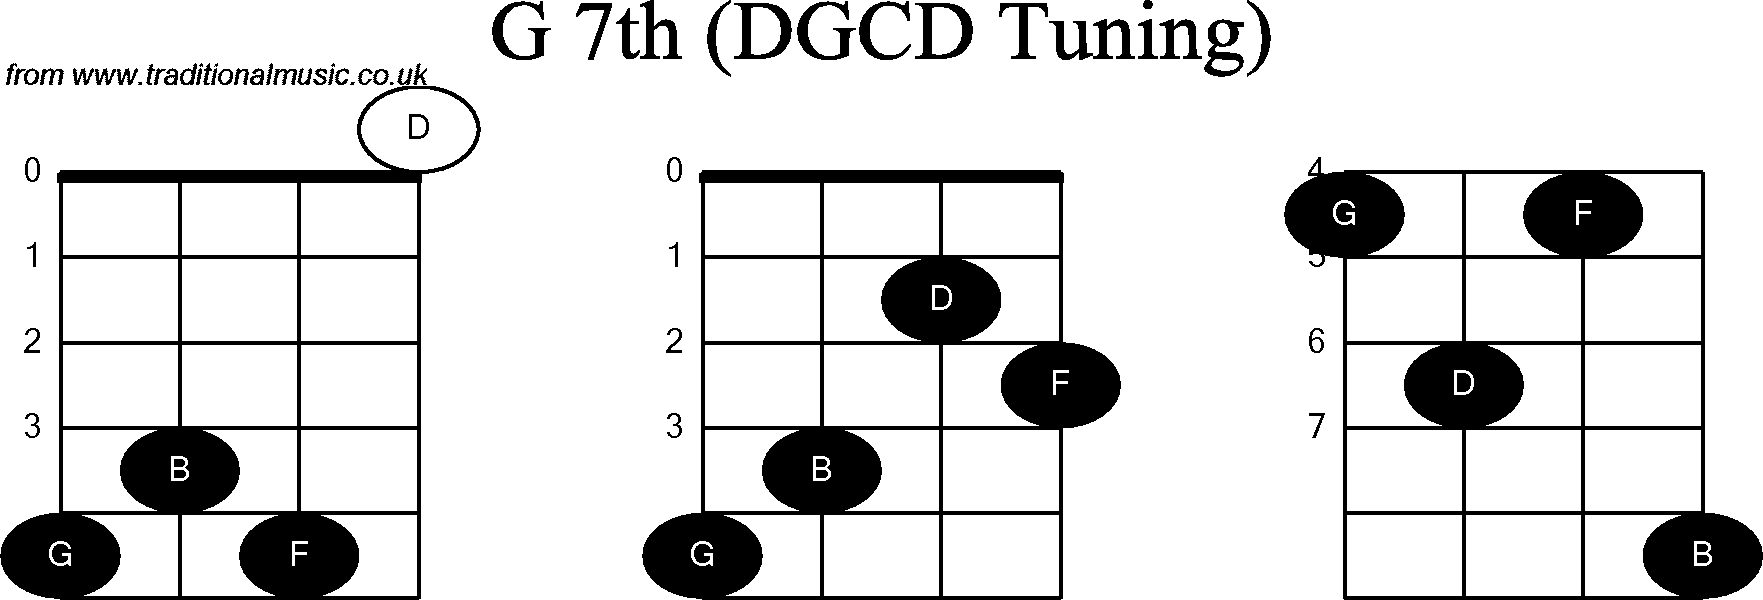 Chord diagrams for Banjo(G Modal) G7th